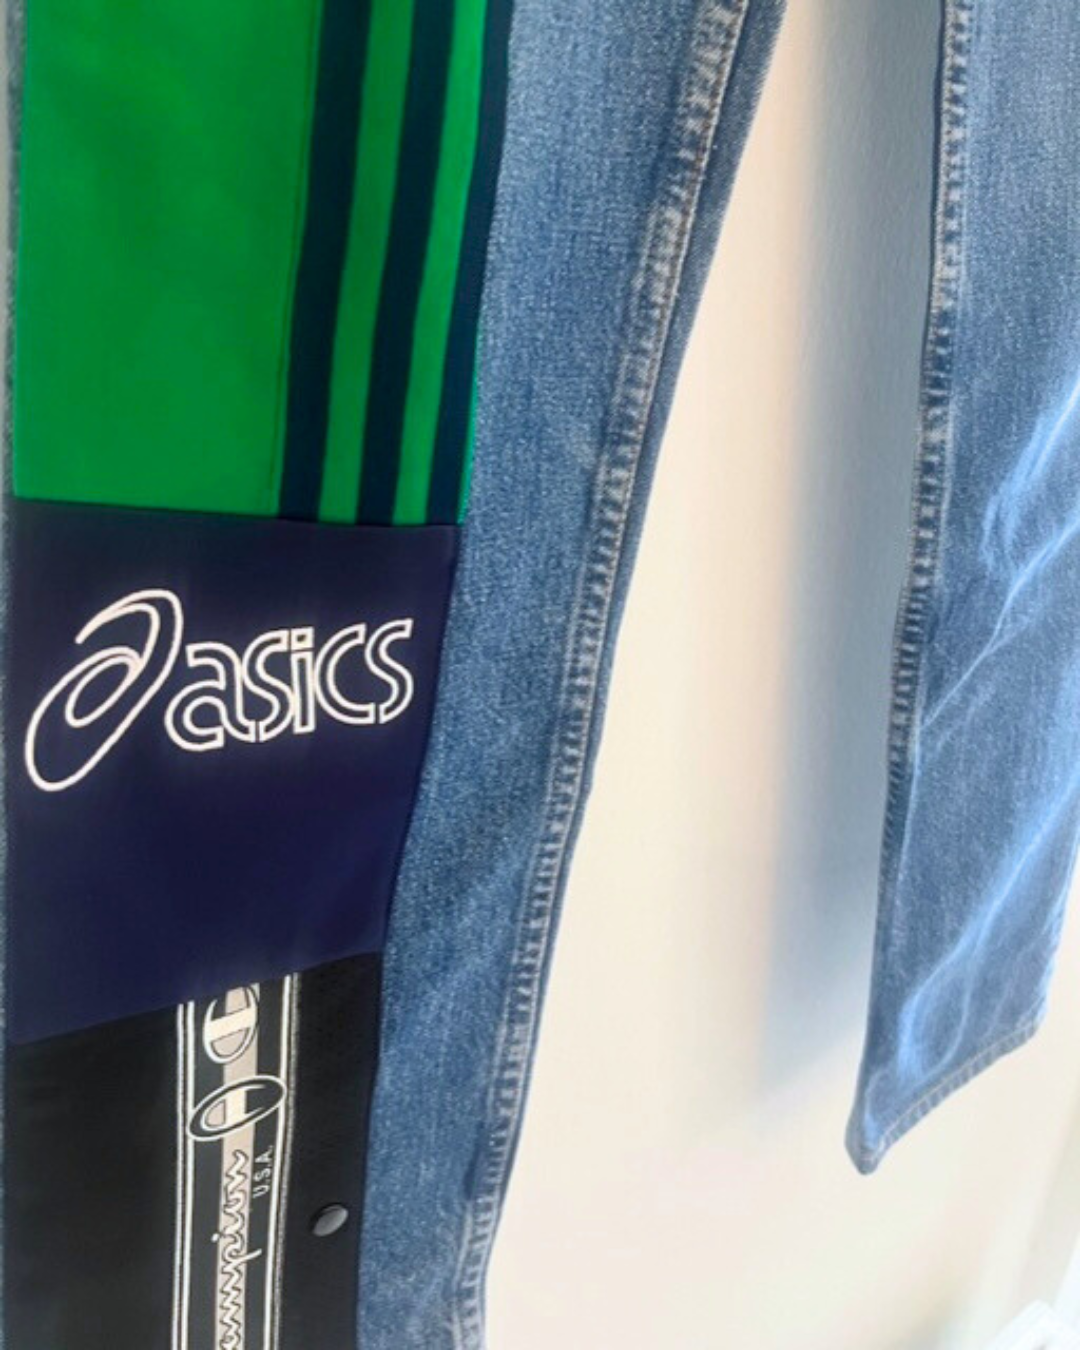 Vintage LEVIS 501 Jeans with vintage sportswear panelling